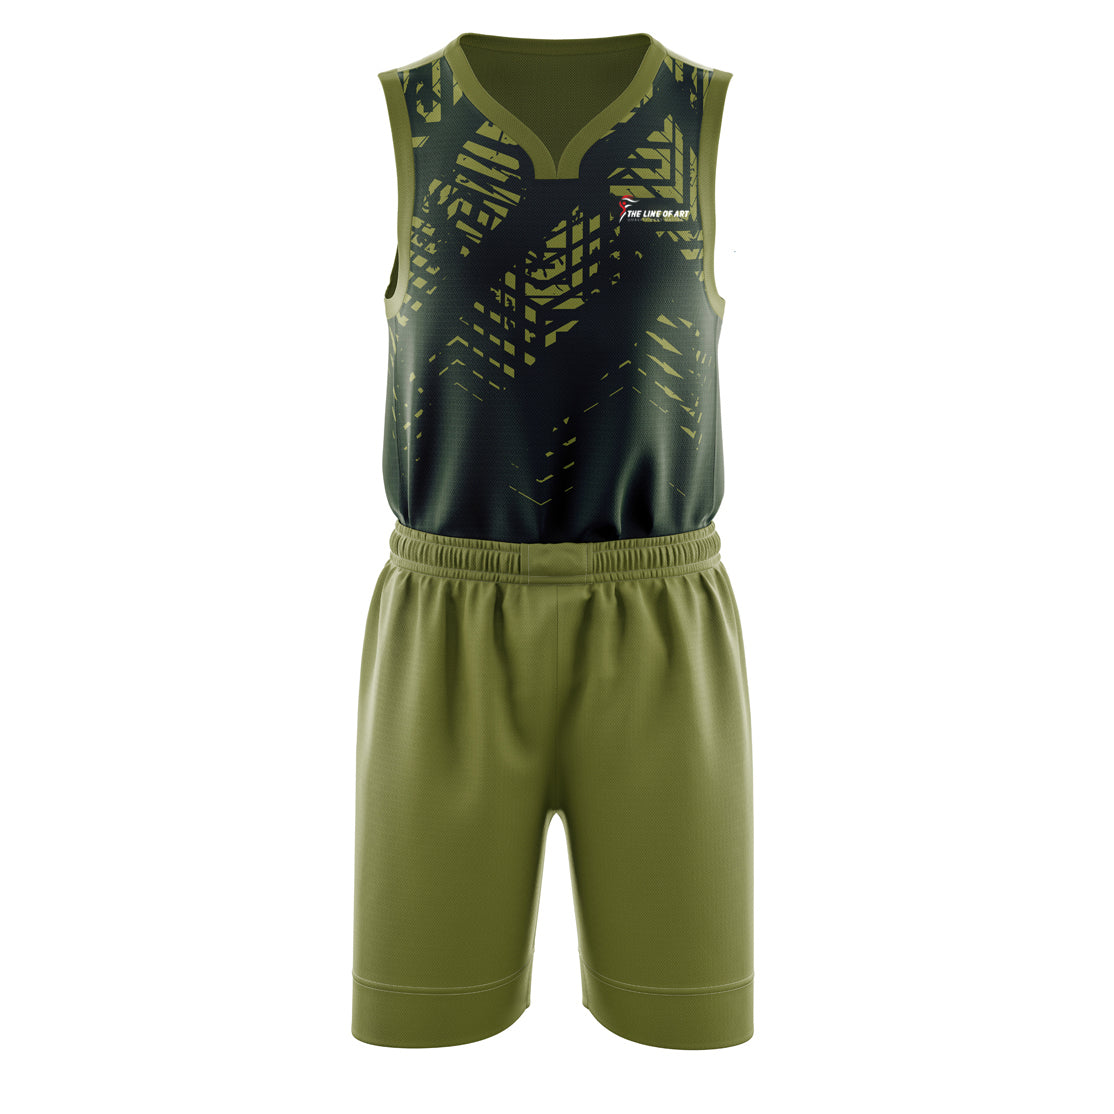 Premium Basketball Uniform - Elevate Your Game | Customised Sportswear Uniform